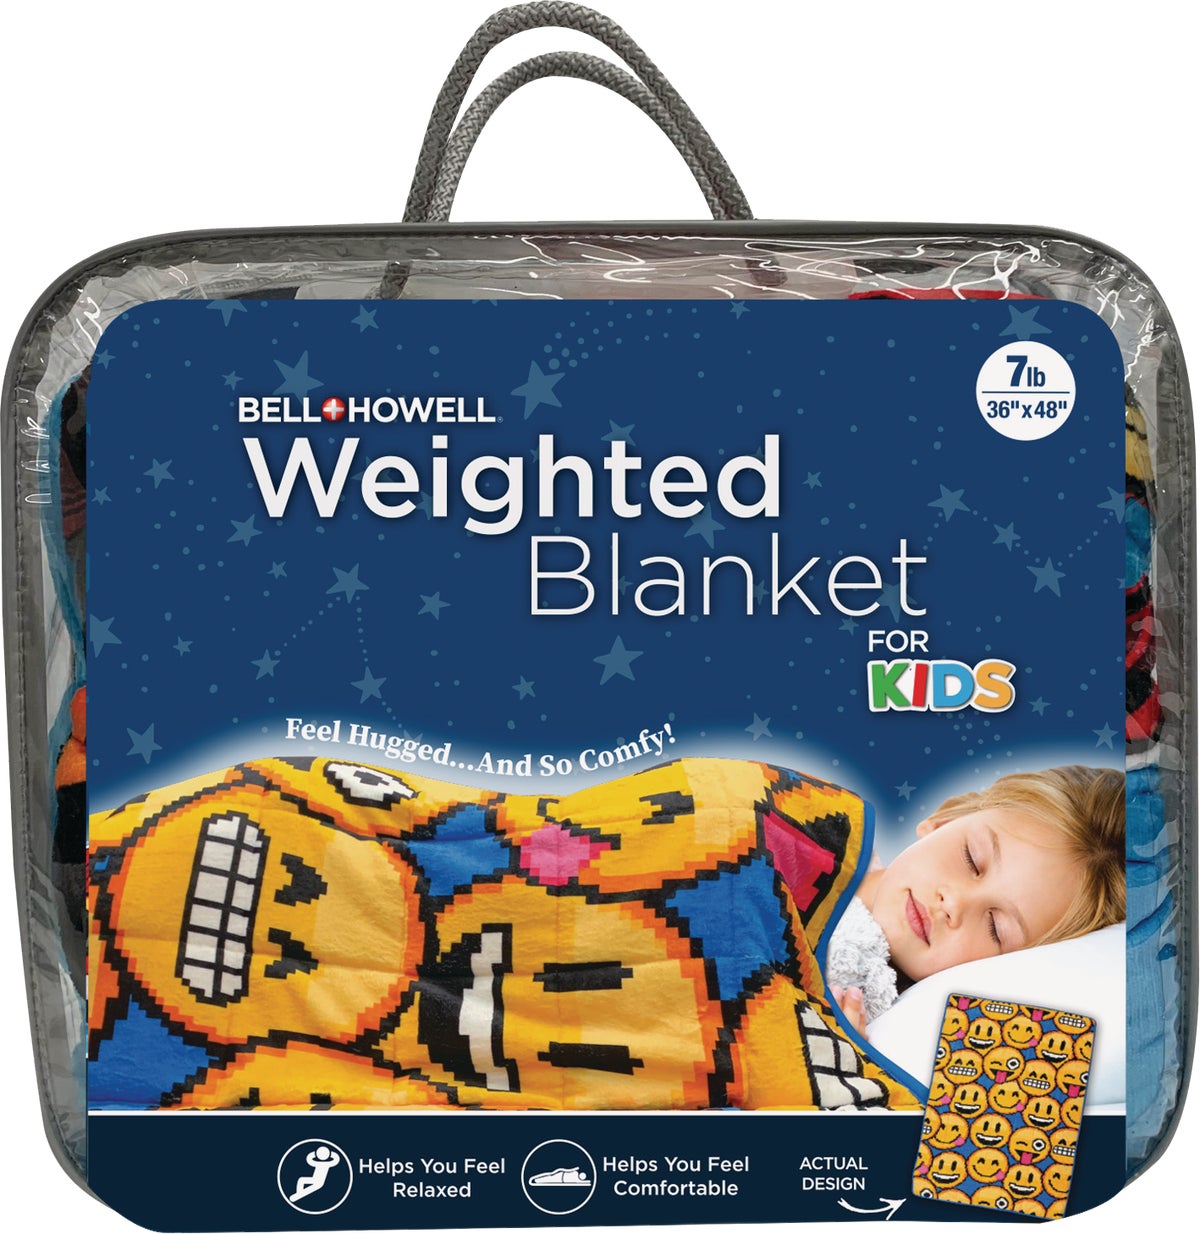 Buy Bell+Howell Kids Weighted Blanket Multi